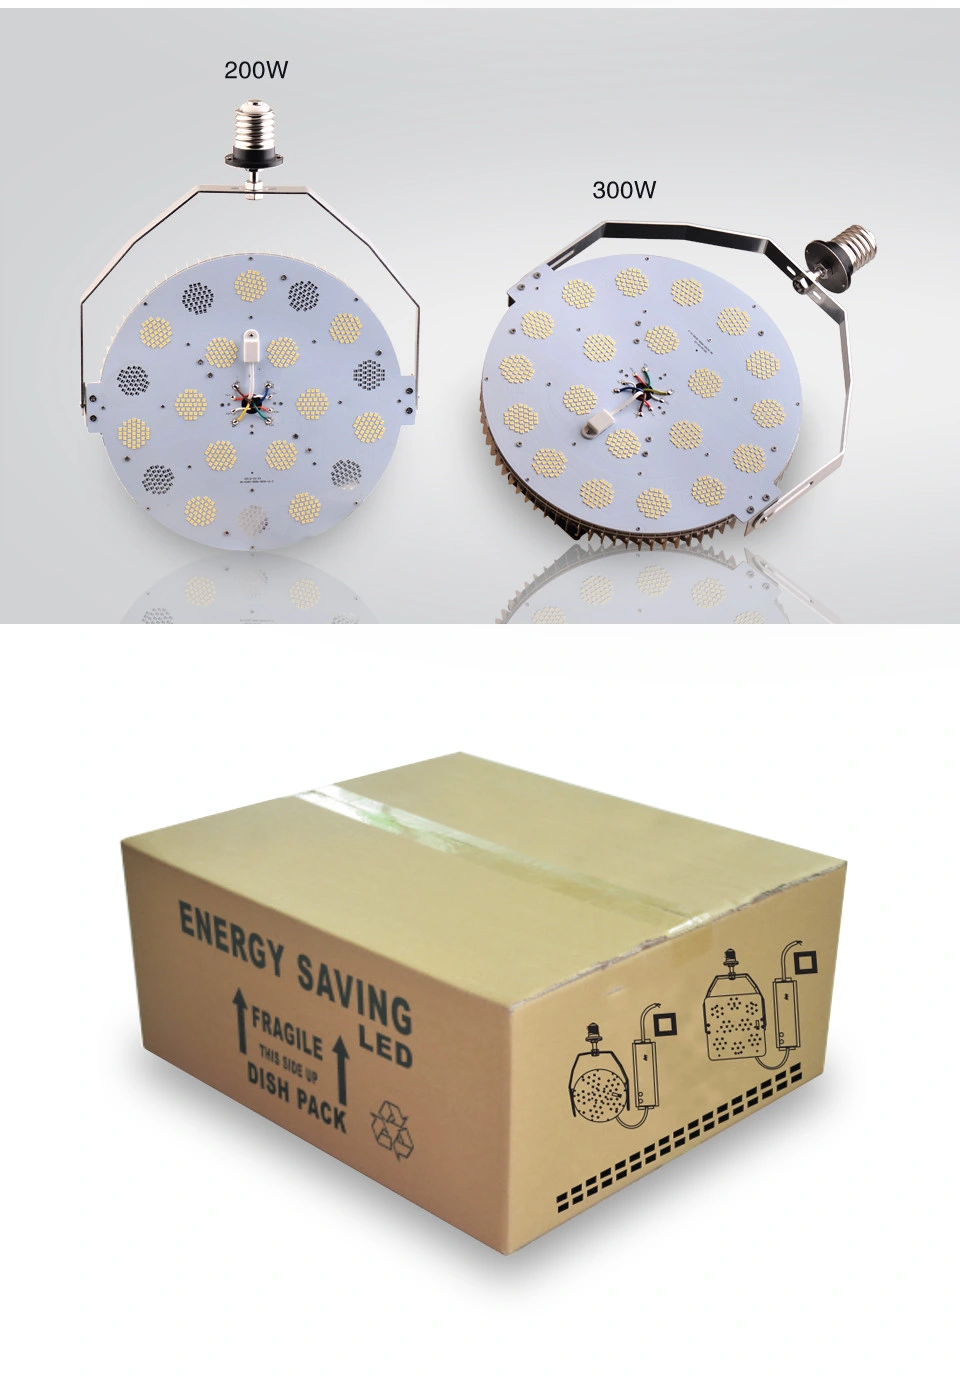 120W Canopy Bulb Retrofit Light with Dlc Certification Replace HPS